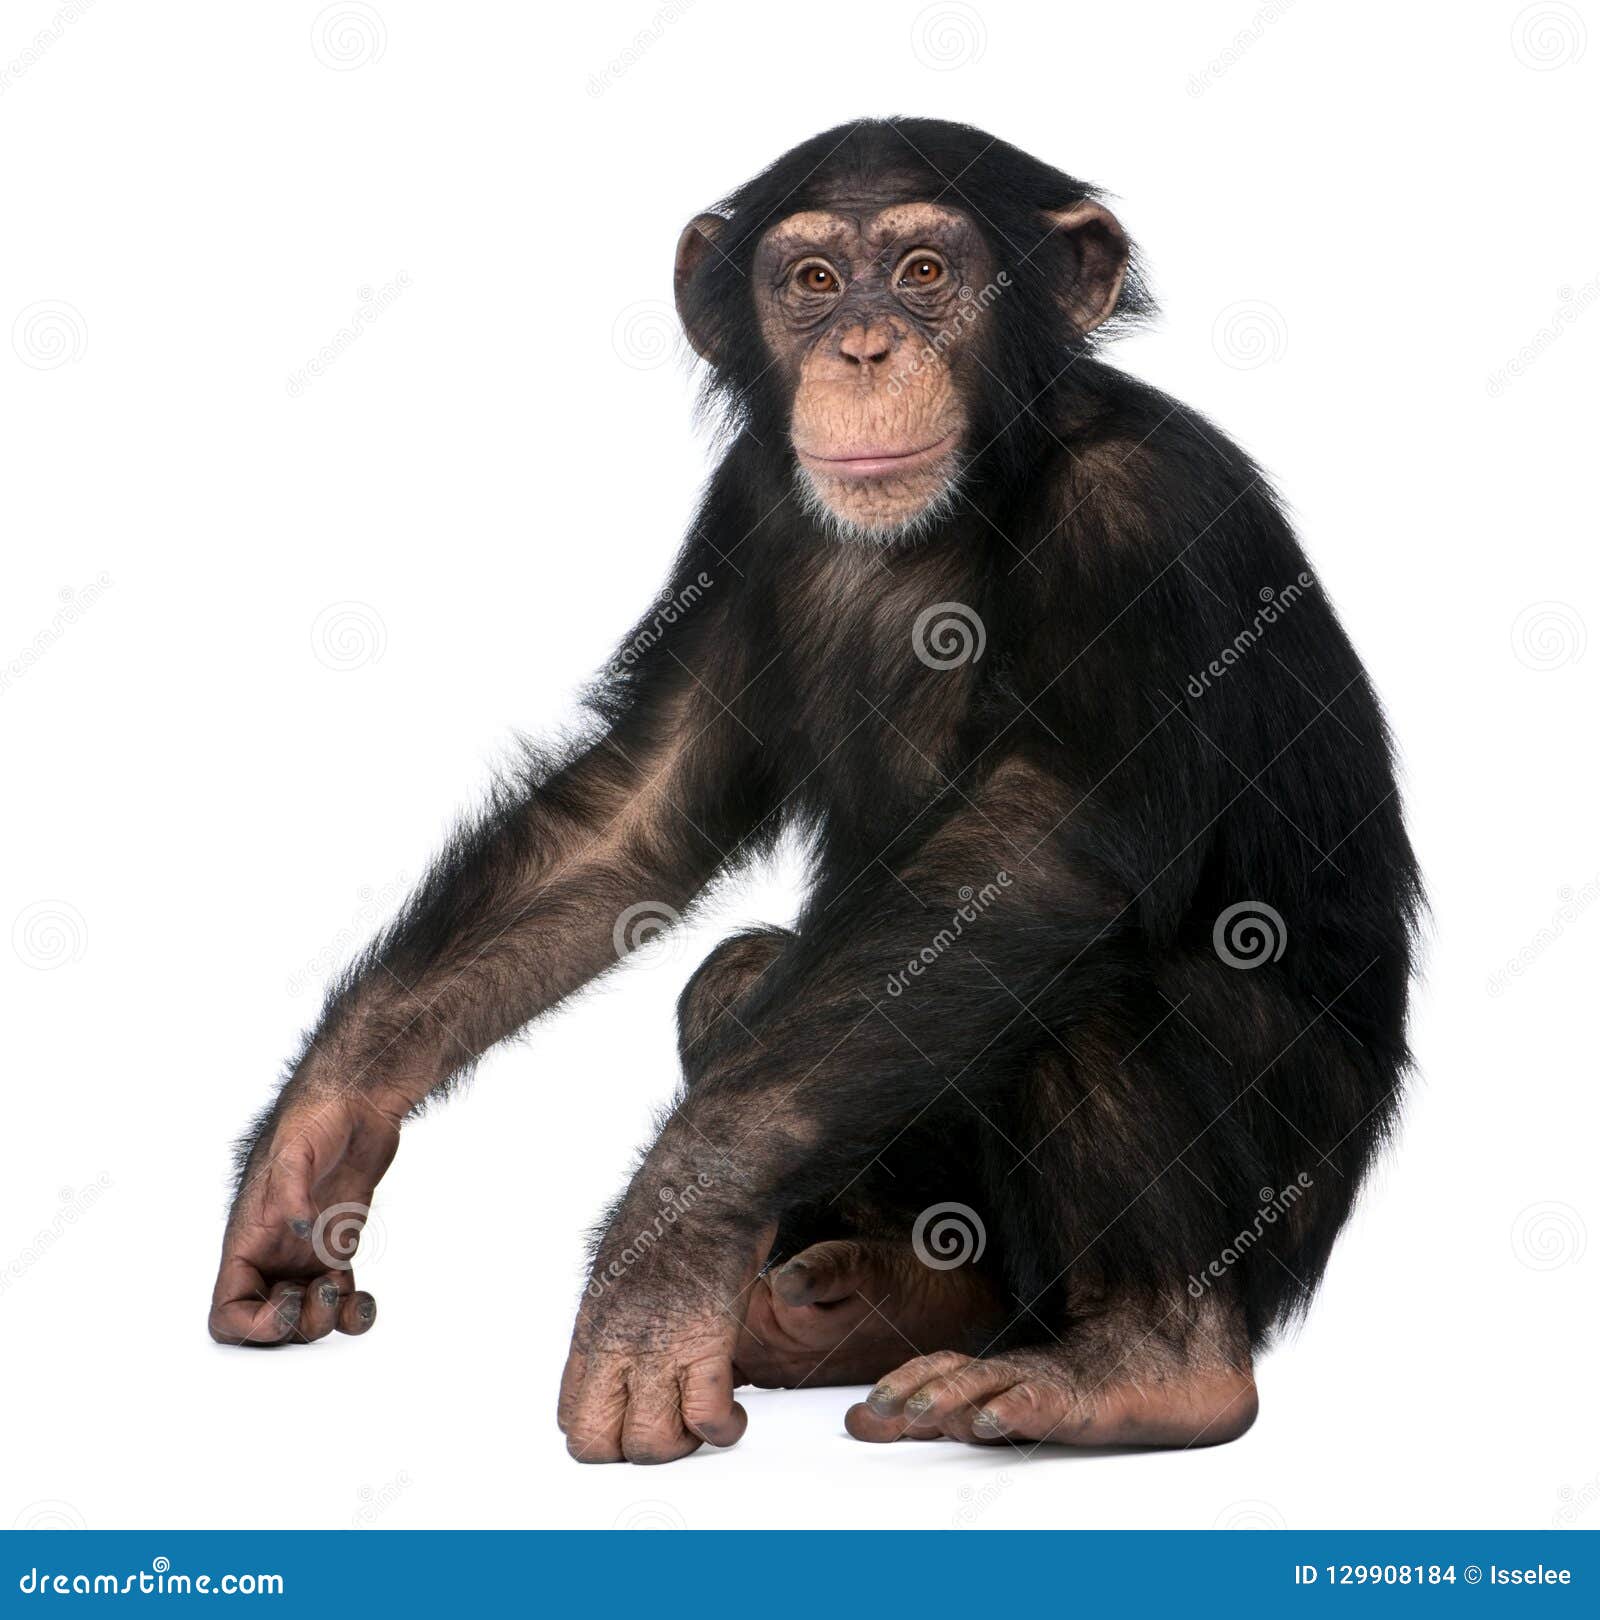 young chimpanzee, simia troglodytes, 5 years old